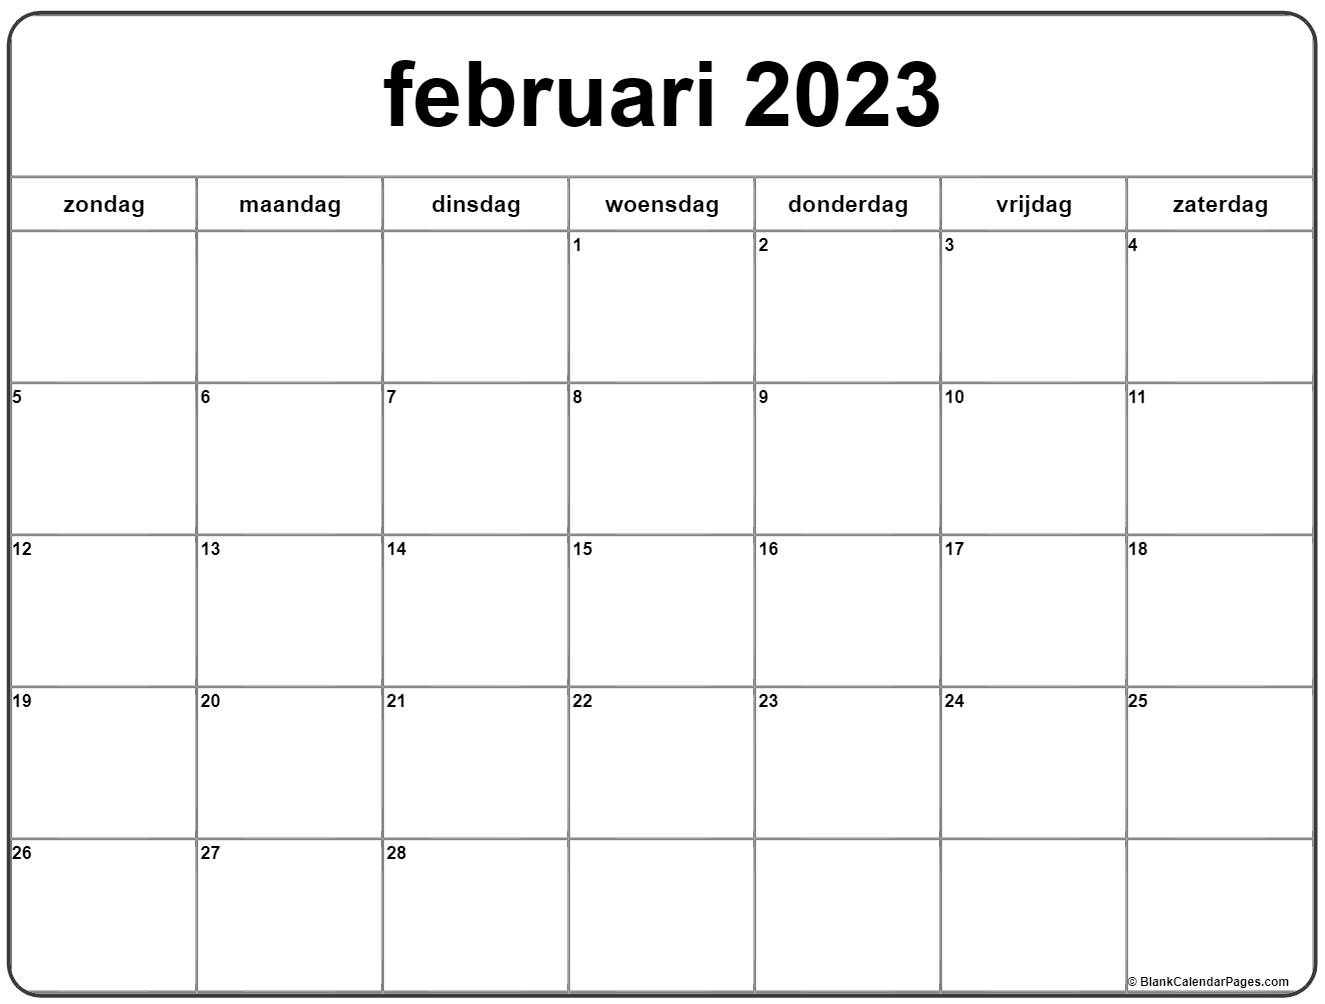 Albany slogan Catastrofaal februari 2023 kalender Nederlandse | Kalender februari